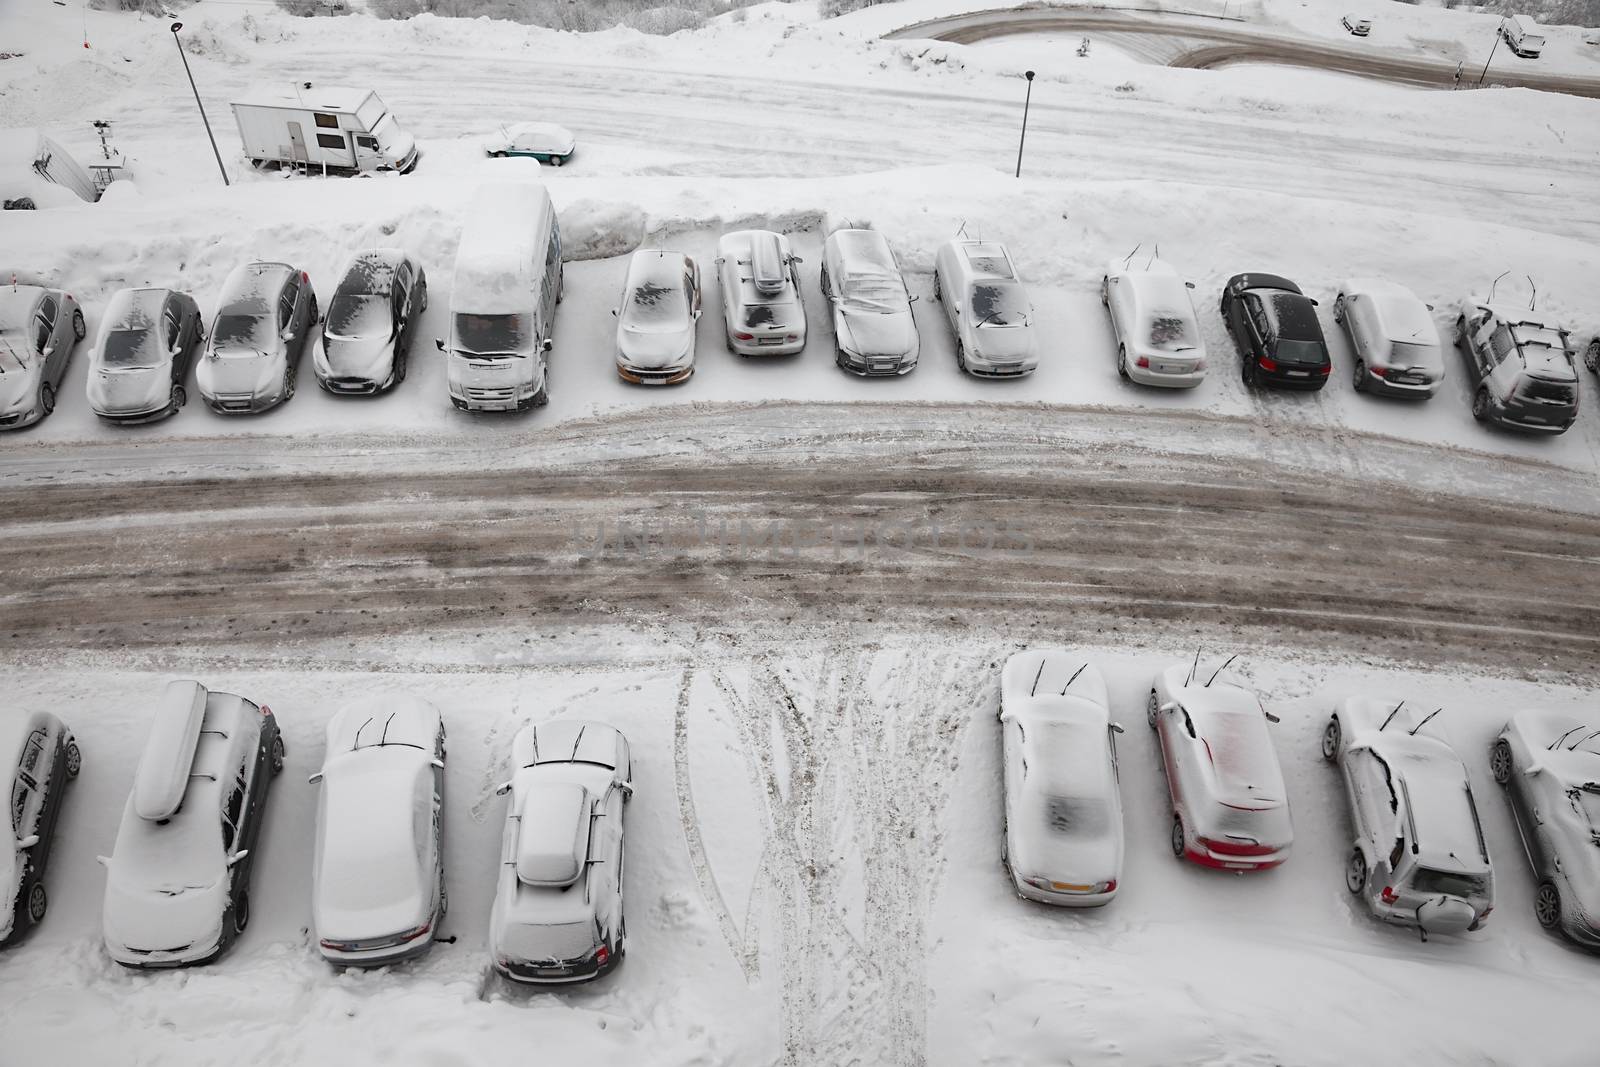 Winter parking by Gudella